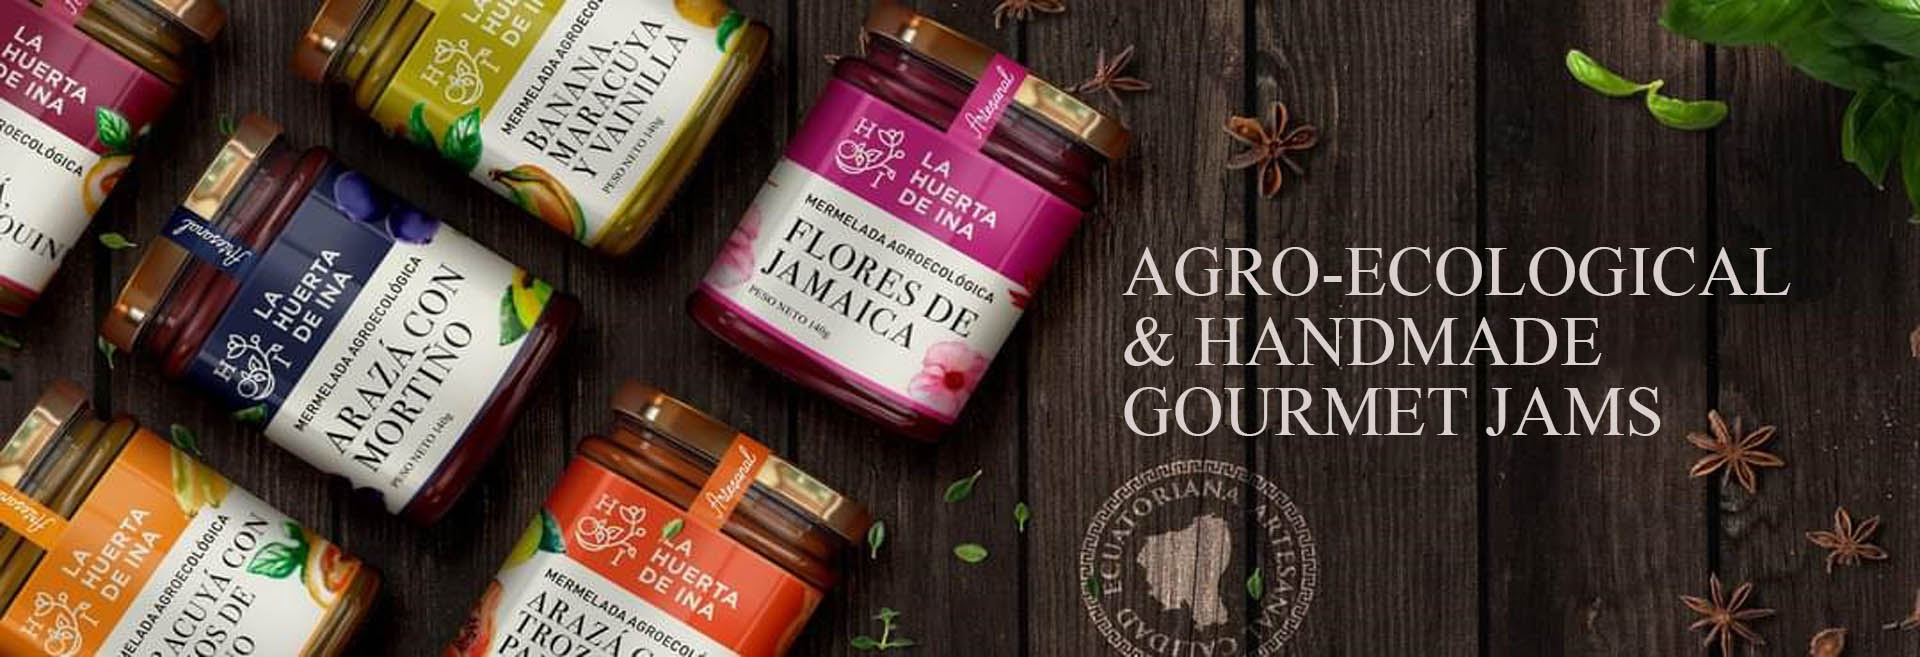 Agro-ecological & Handmade Gourmet Jams 